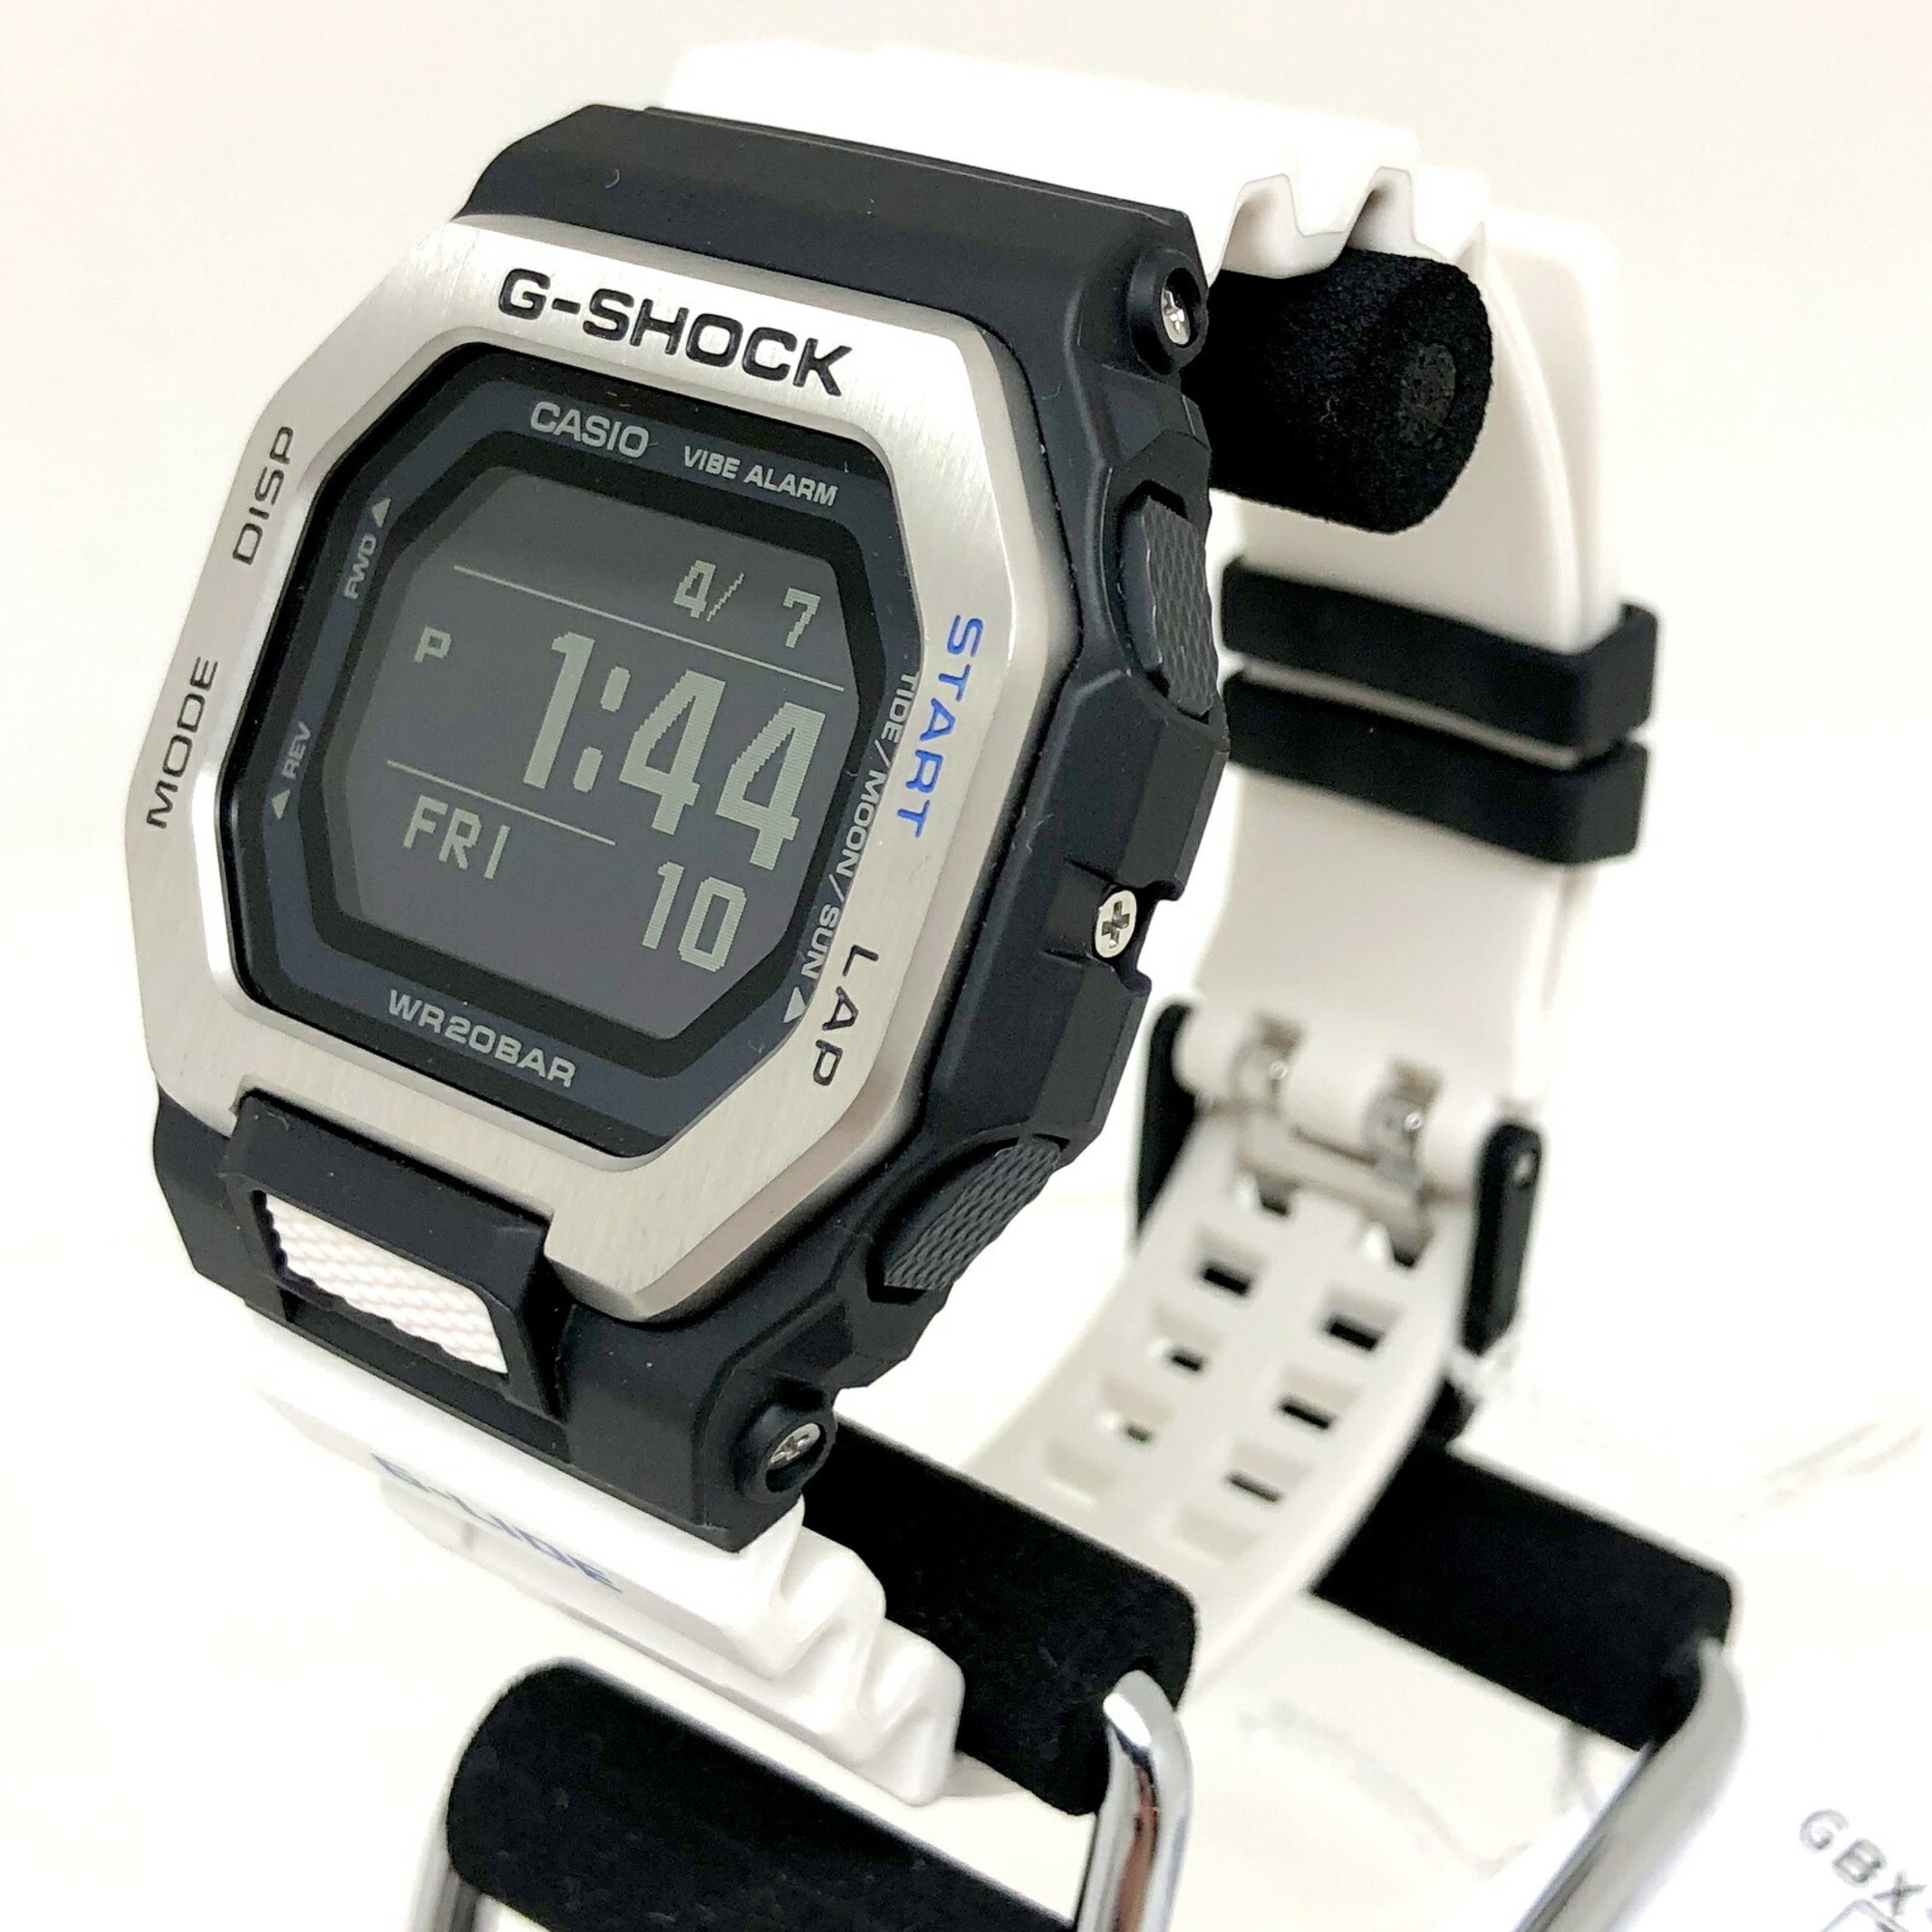 CASIO Casio G-SHOCK Watch GBX-100-7 G-LIDE G-Ride Digital Smartphone Linked Model White Black ITXWMH71M9S0